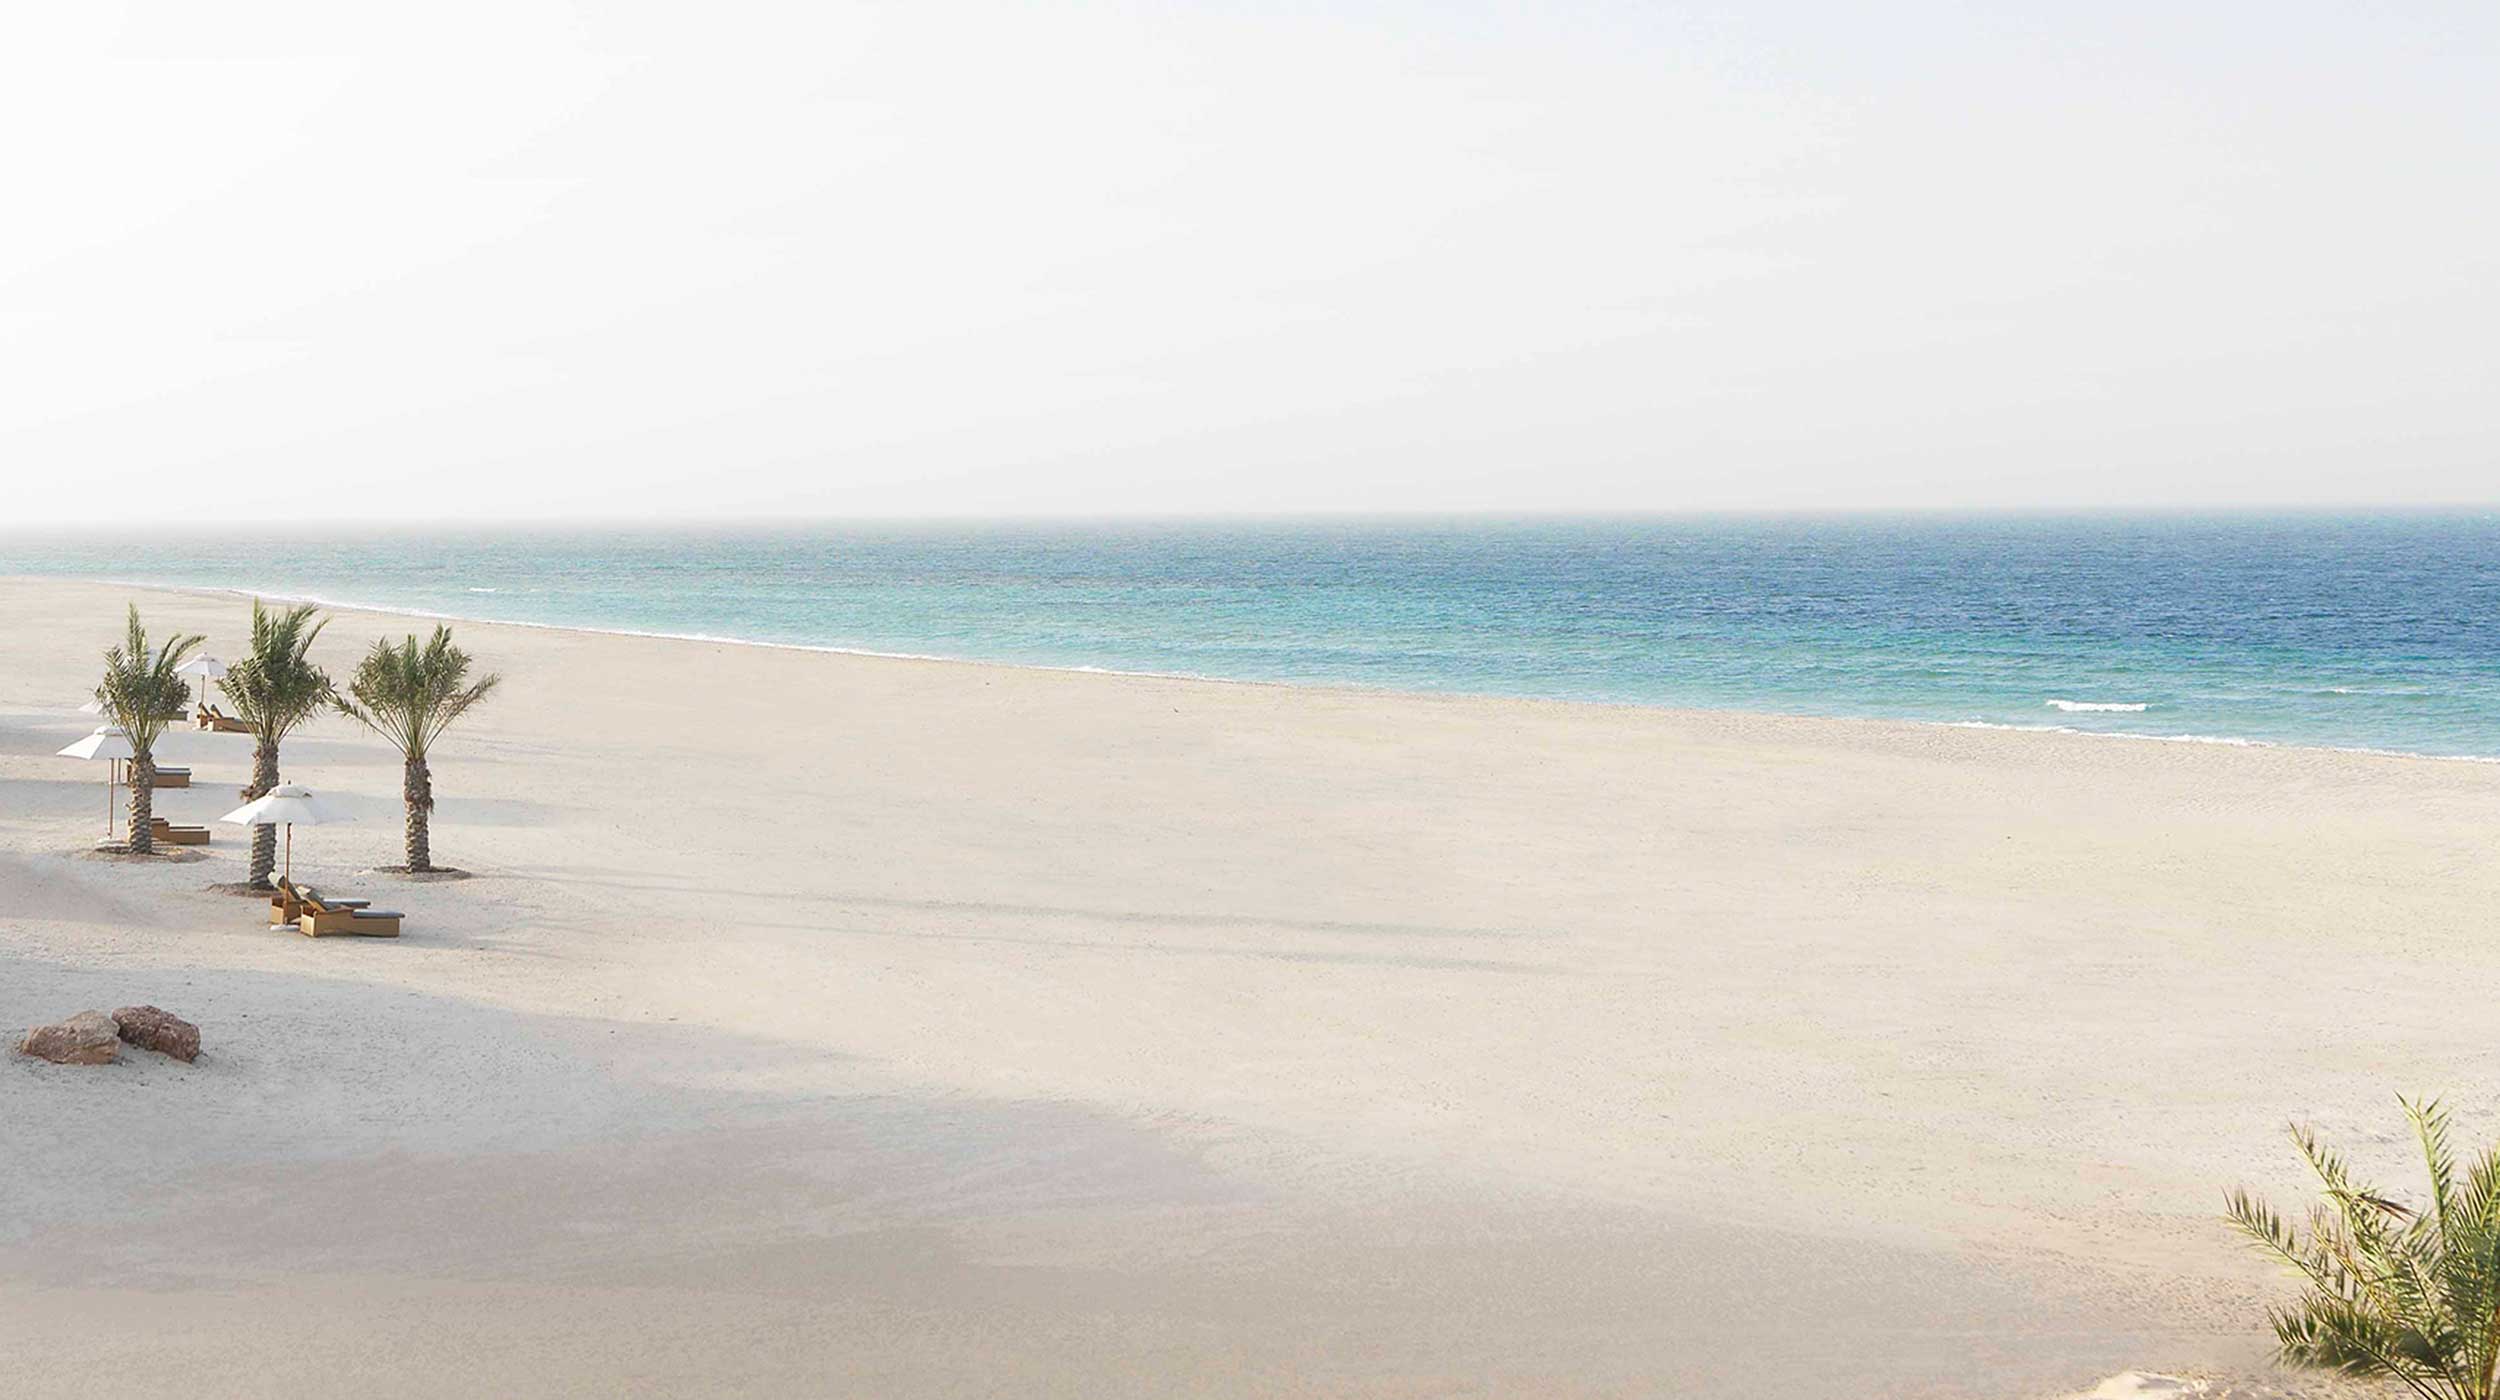 Beautiful sandy beach in the Emirate of Abu Dhabi